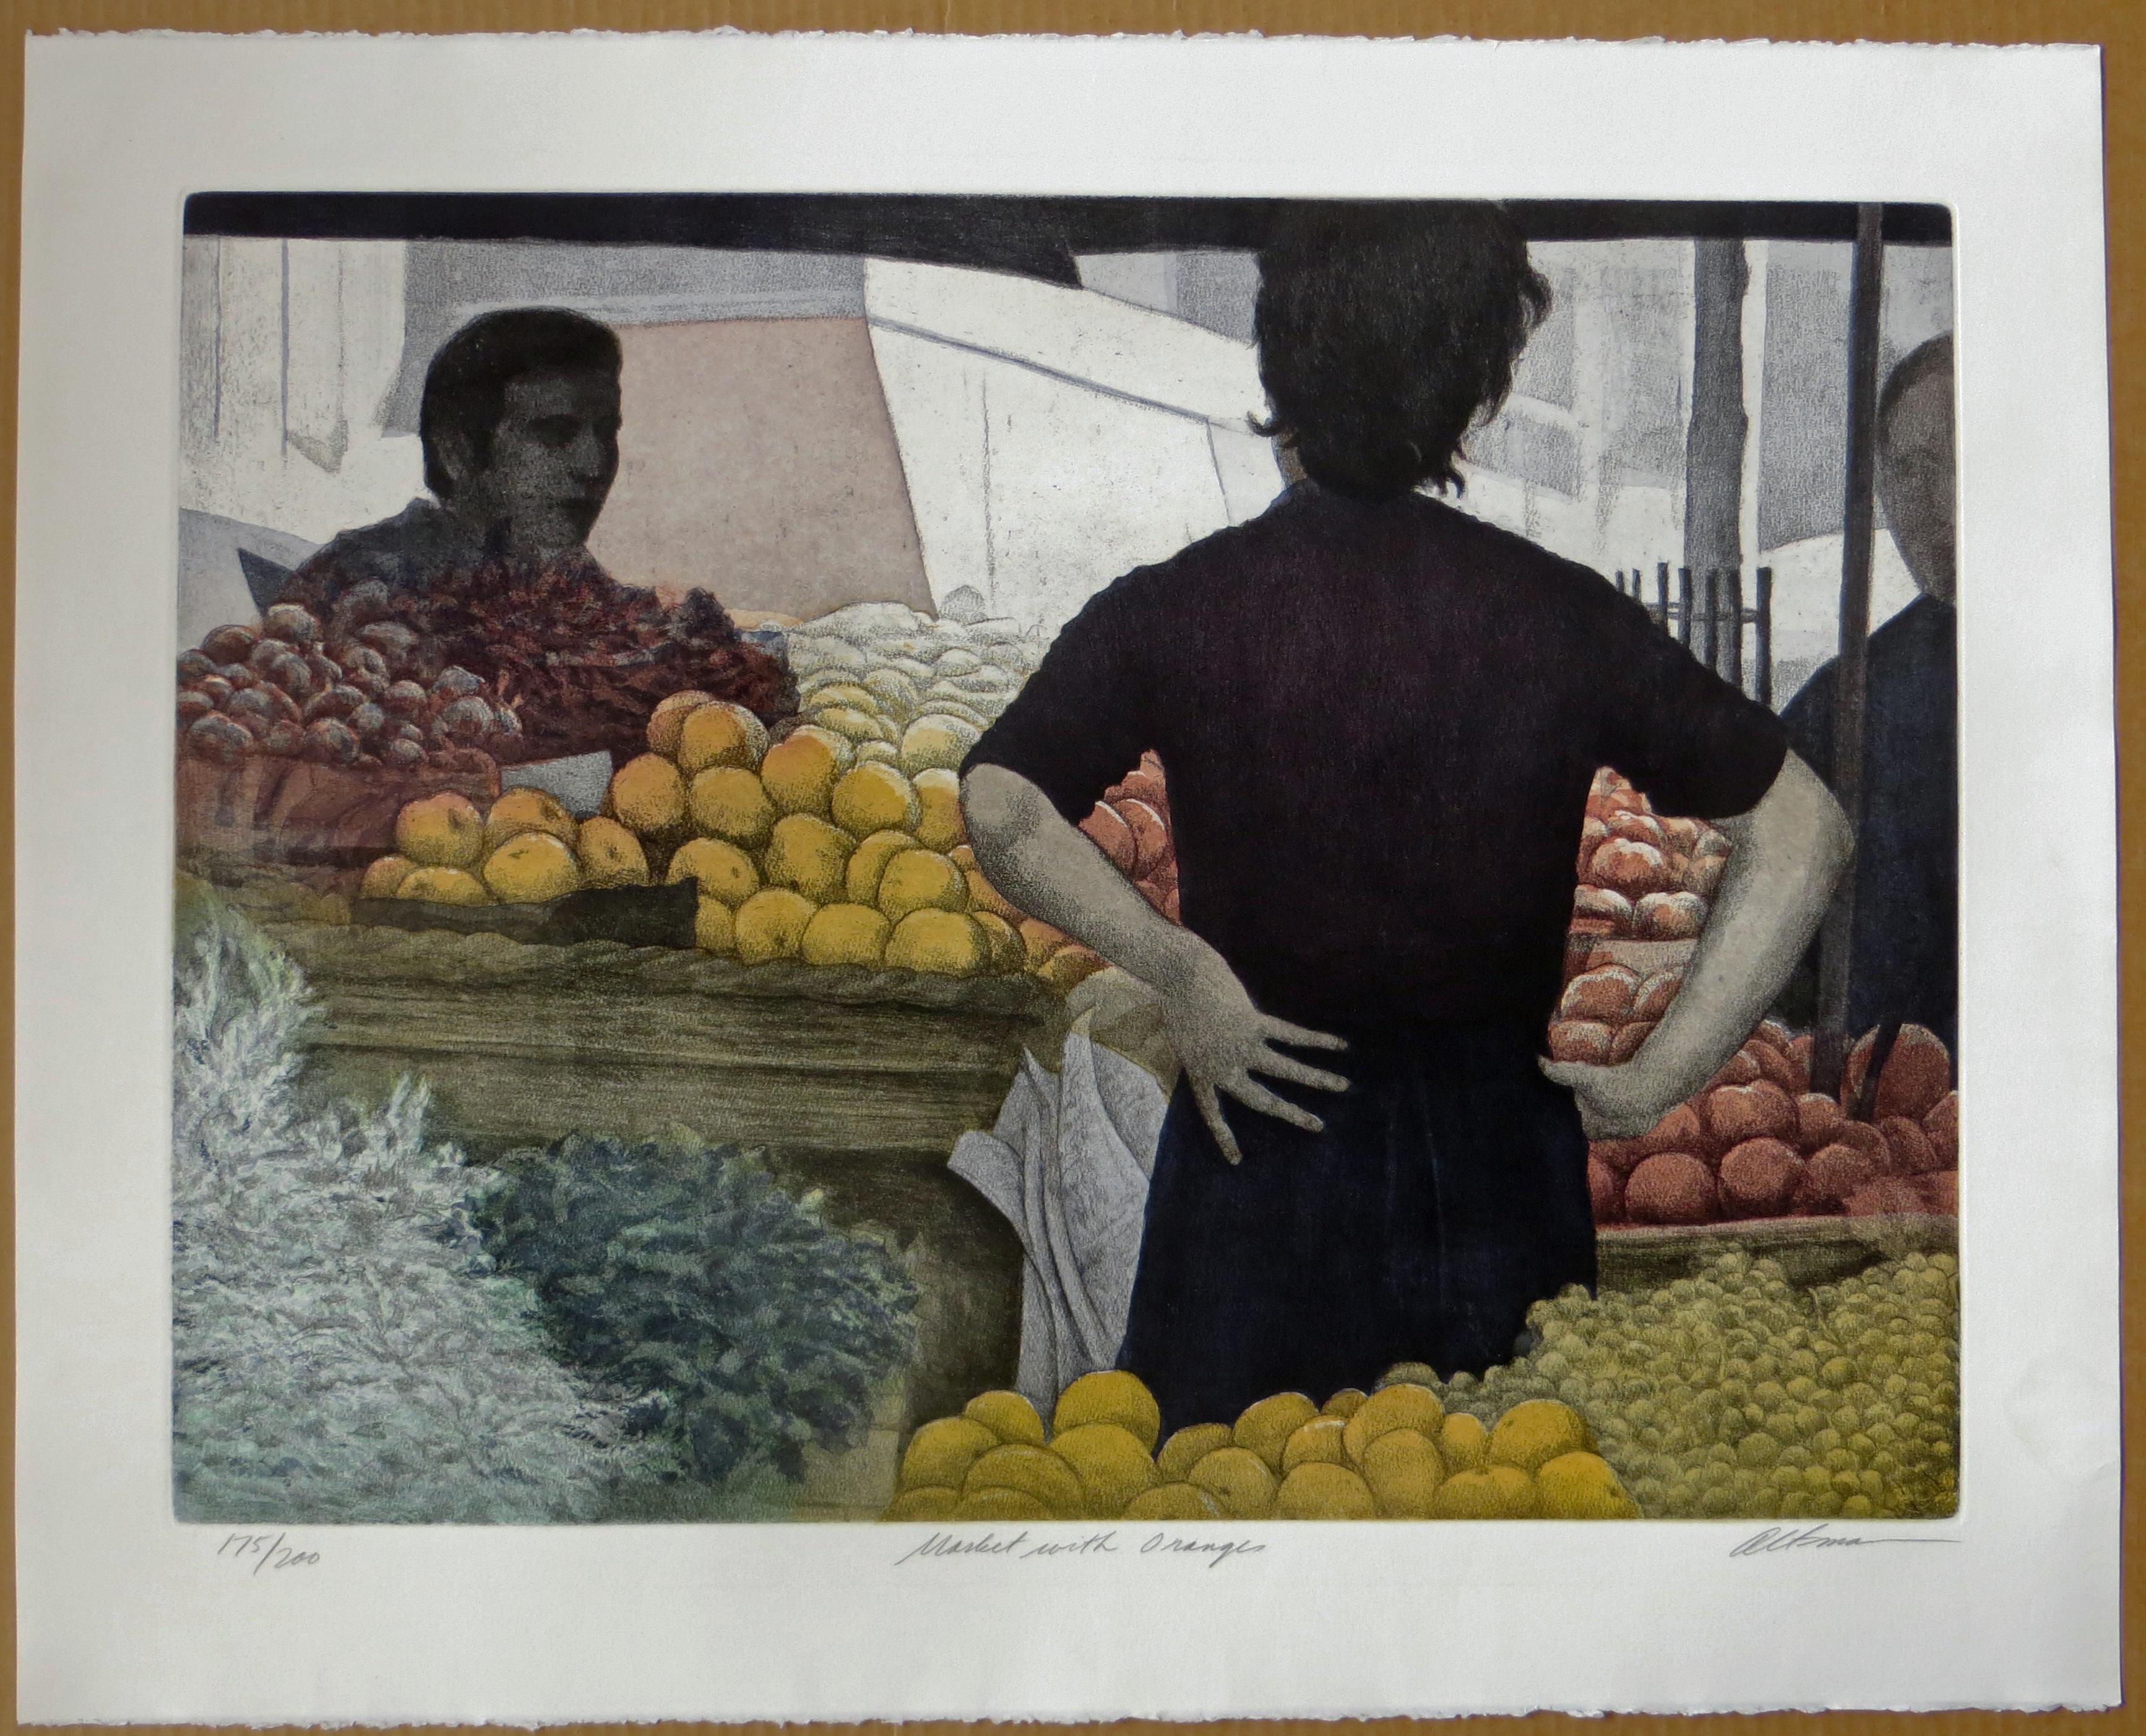 Market with Oranges - Print by Harold Altman